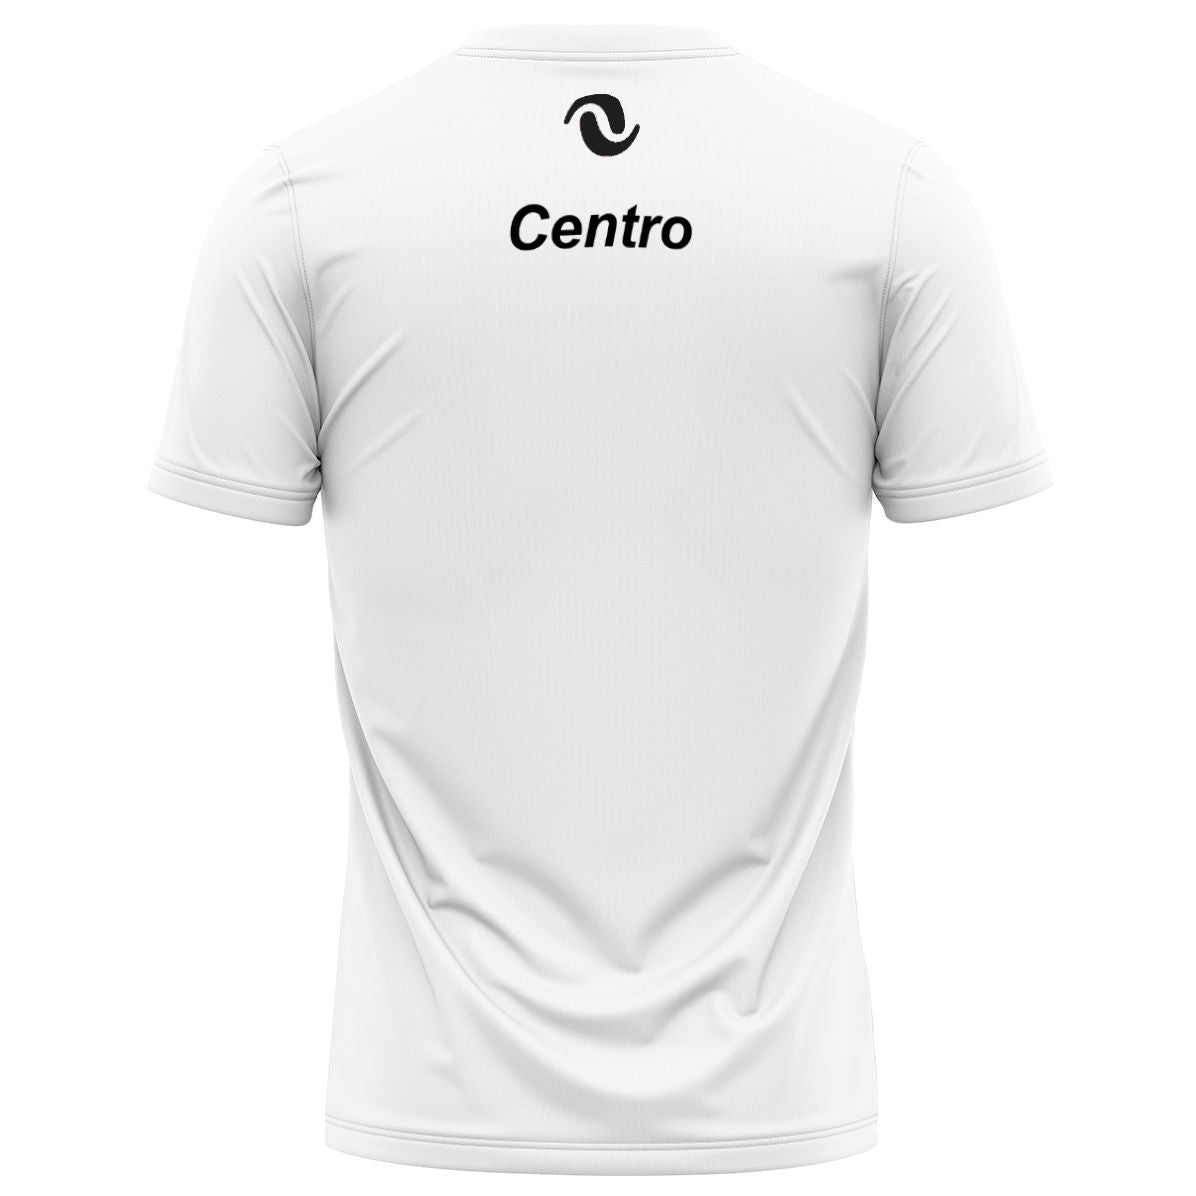 NV Centro - Performance Shirt